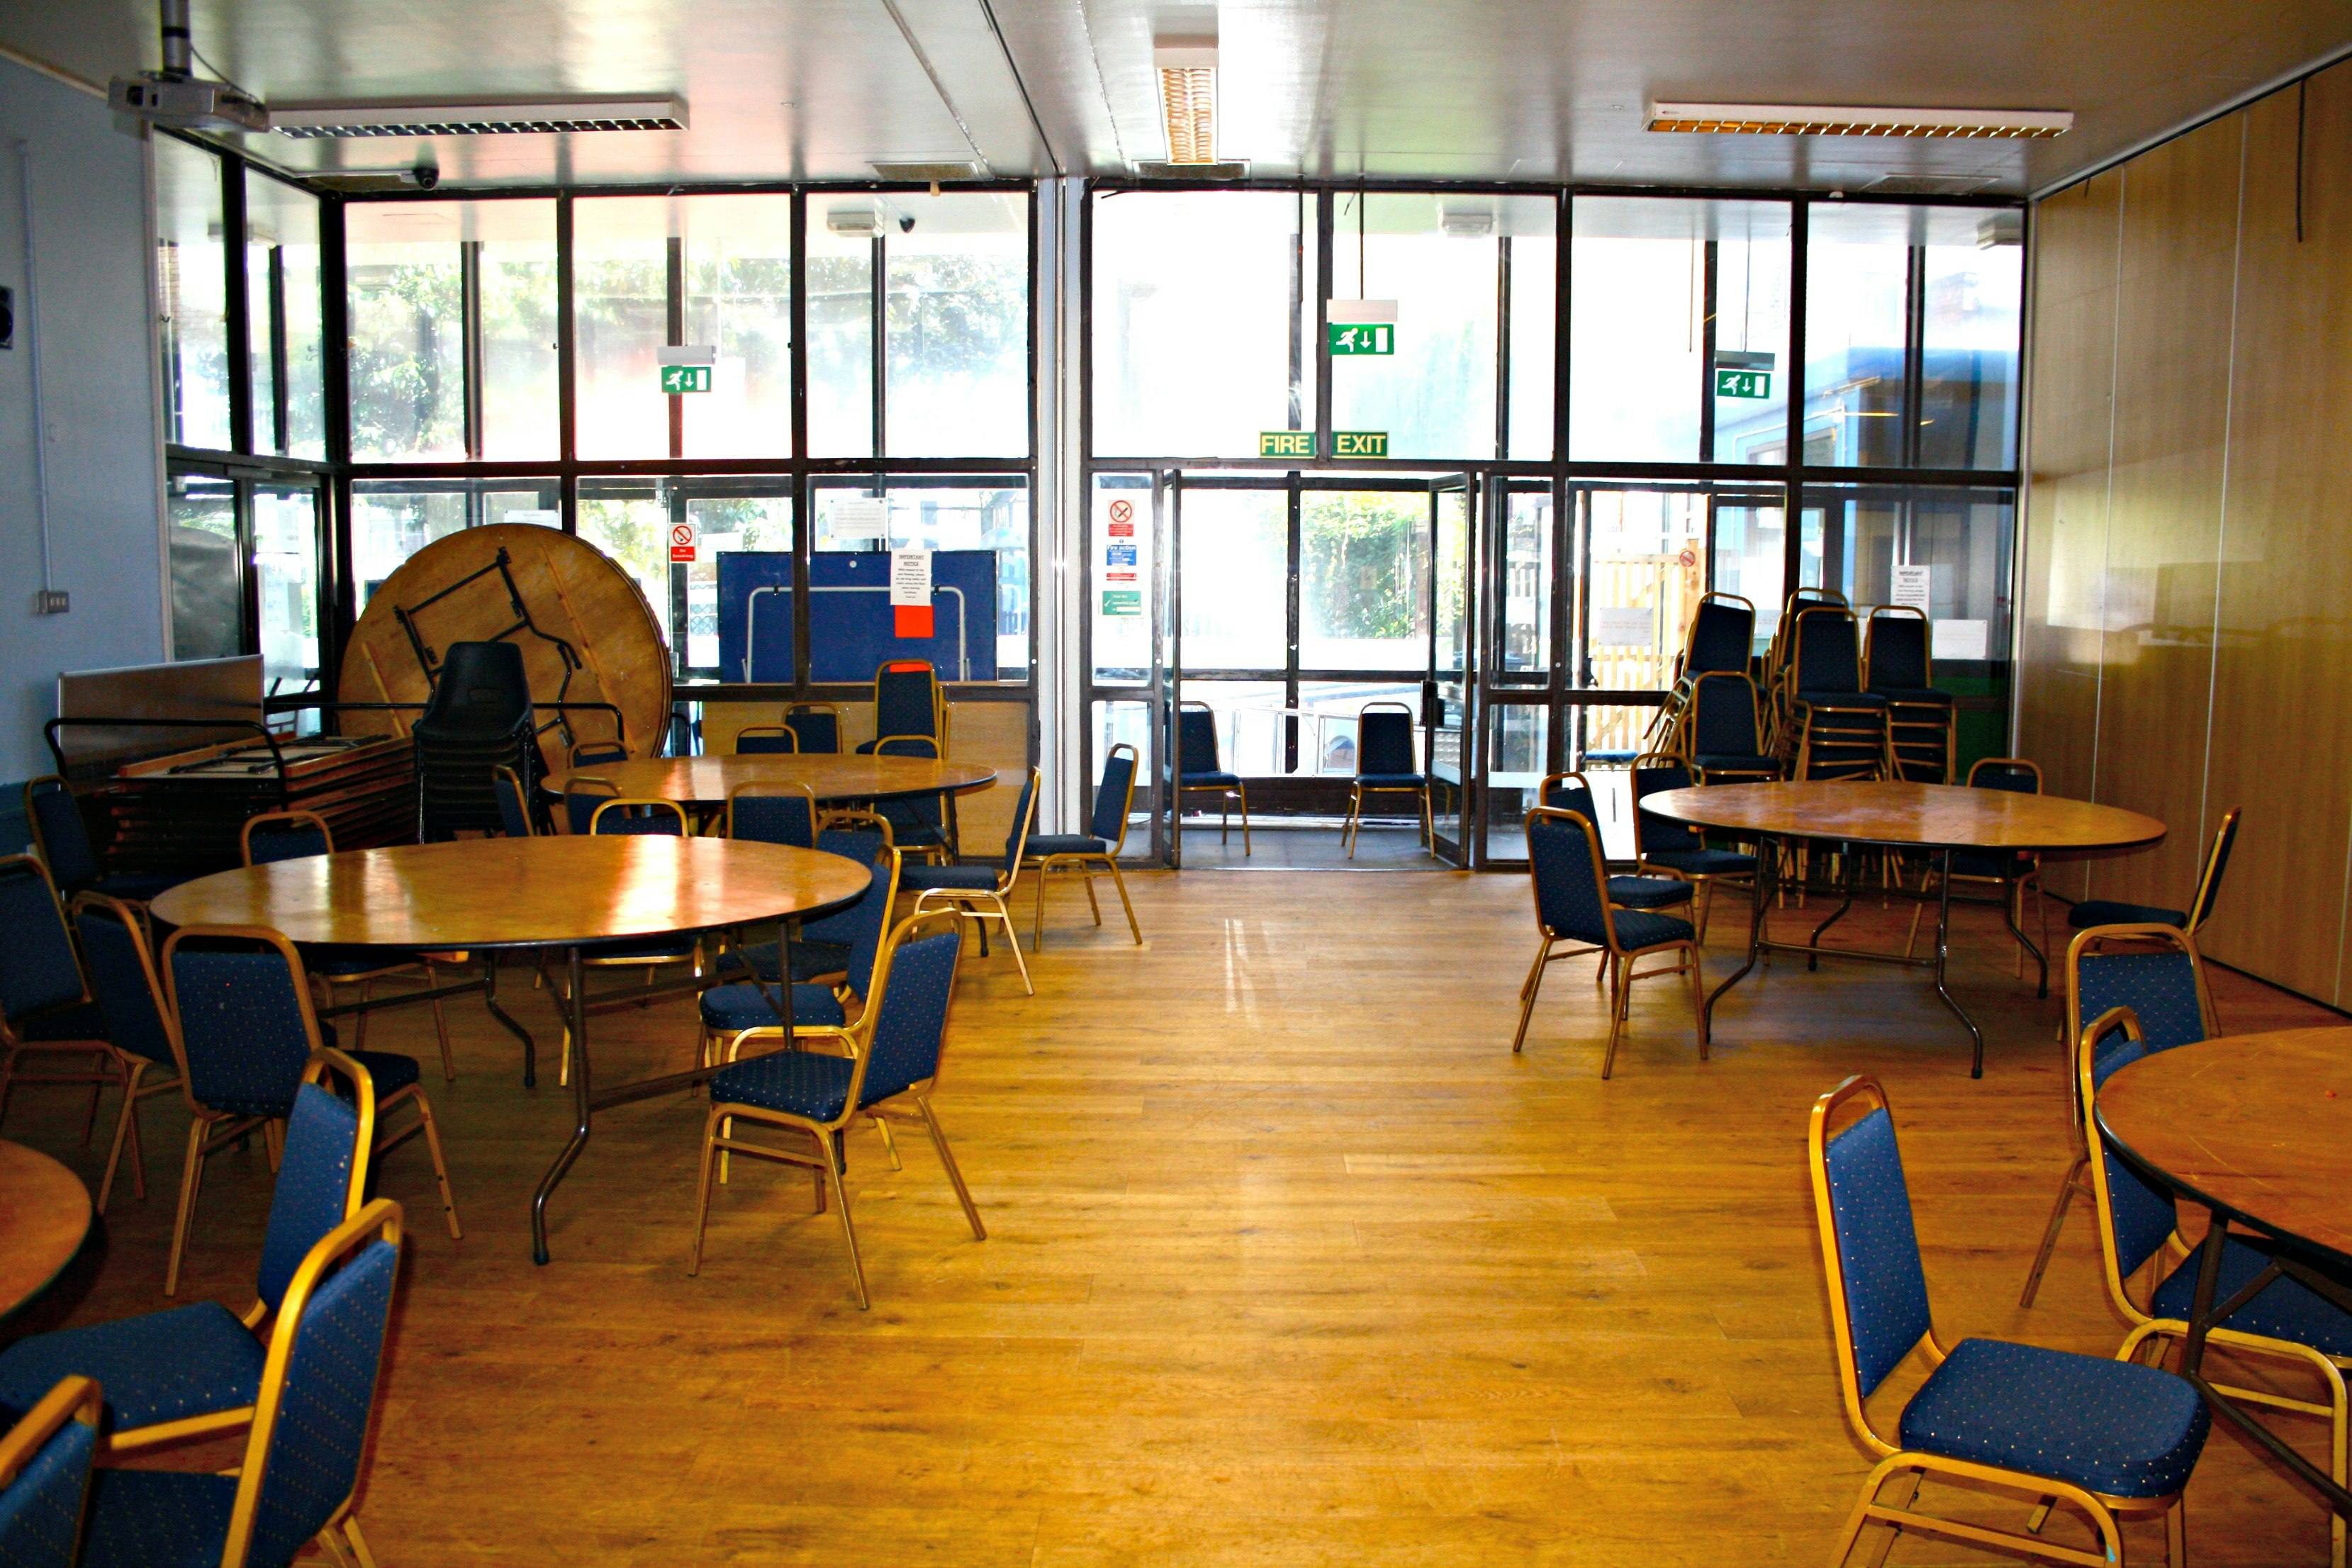 Queens Crescent Community Centre - Main Hall image 1